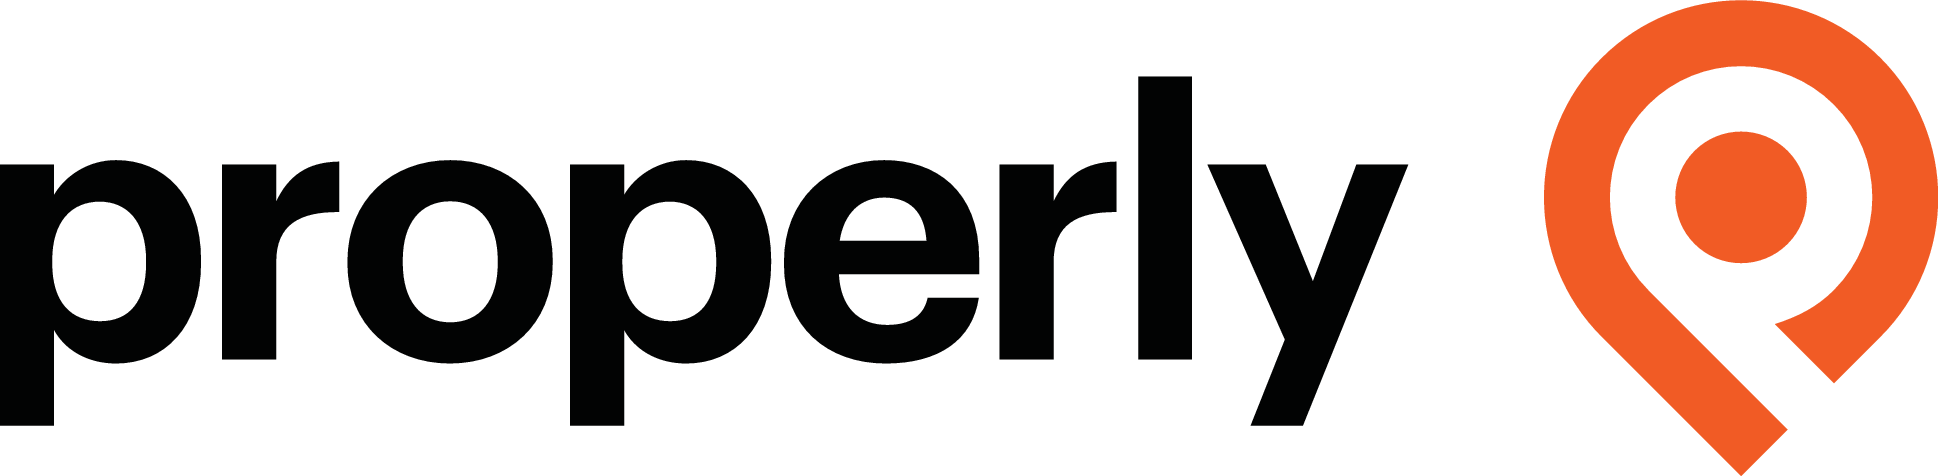 properly logo (high res)